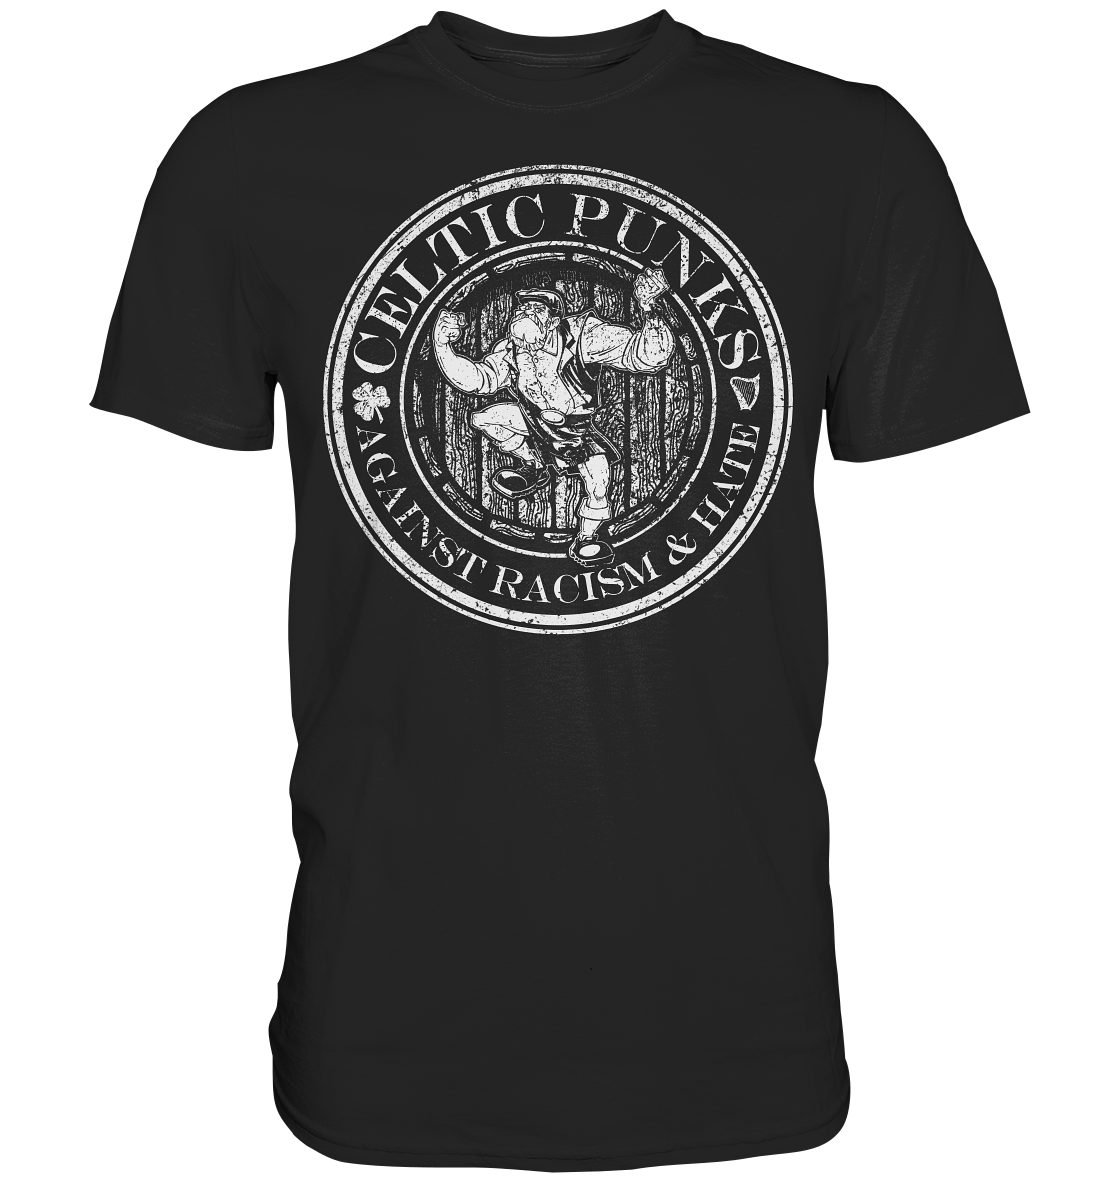 Celtic Punks "Against Racism & Hate" - Premium Shirt